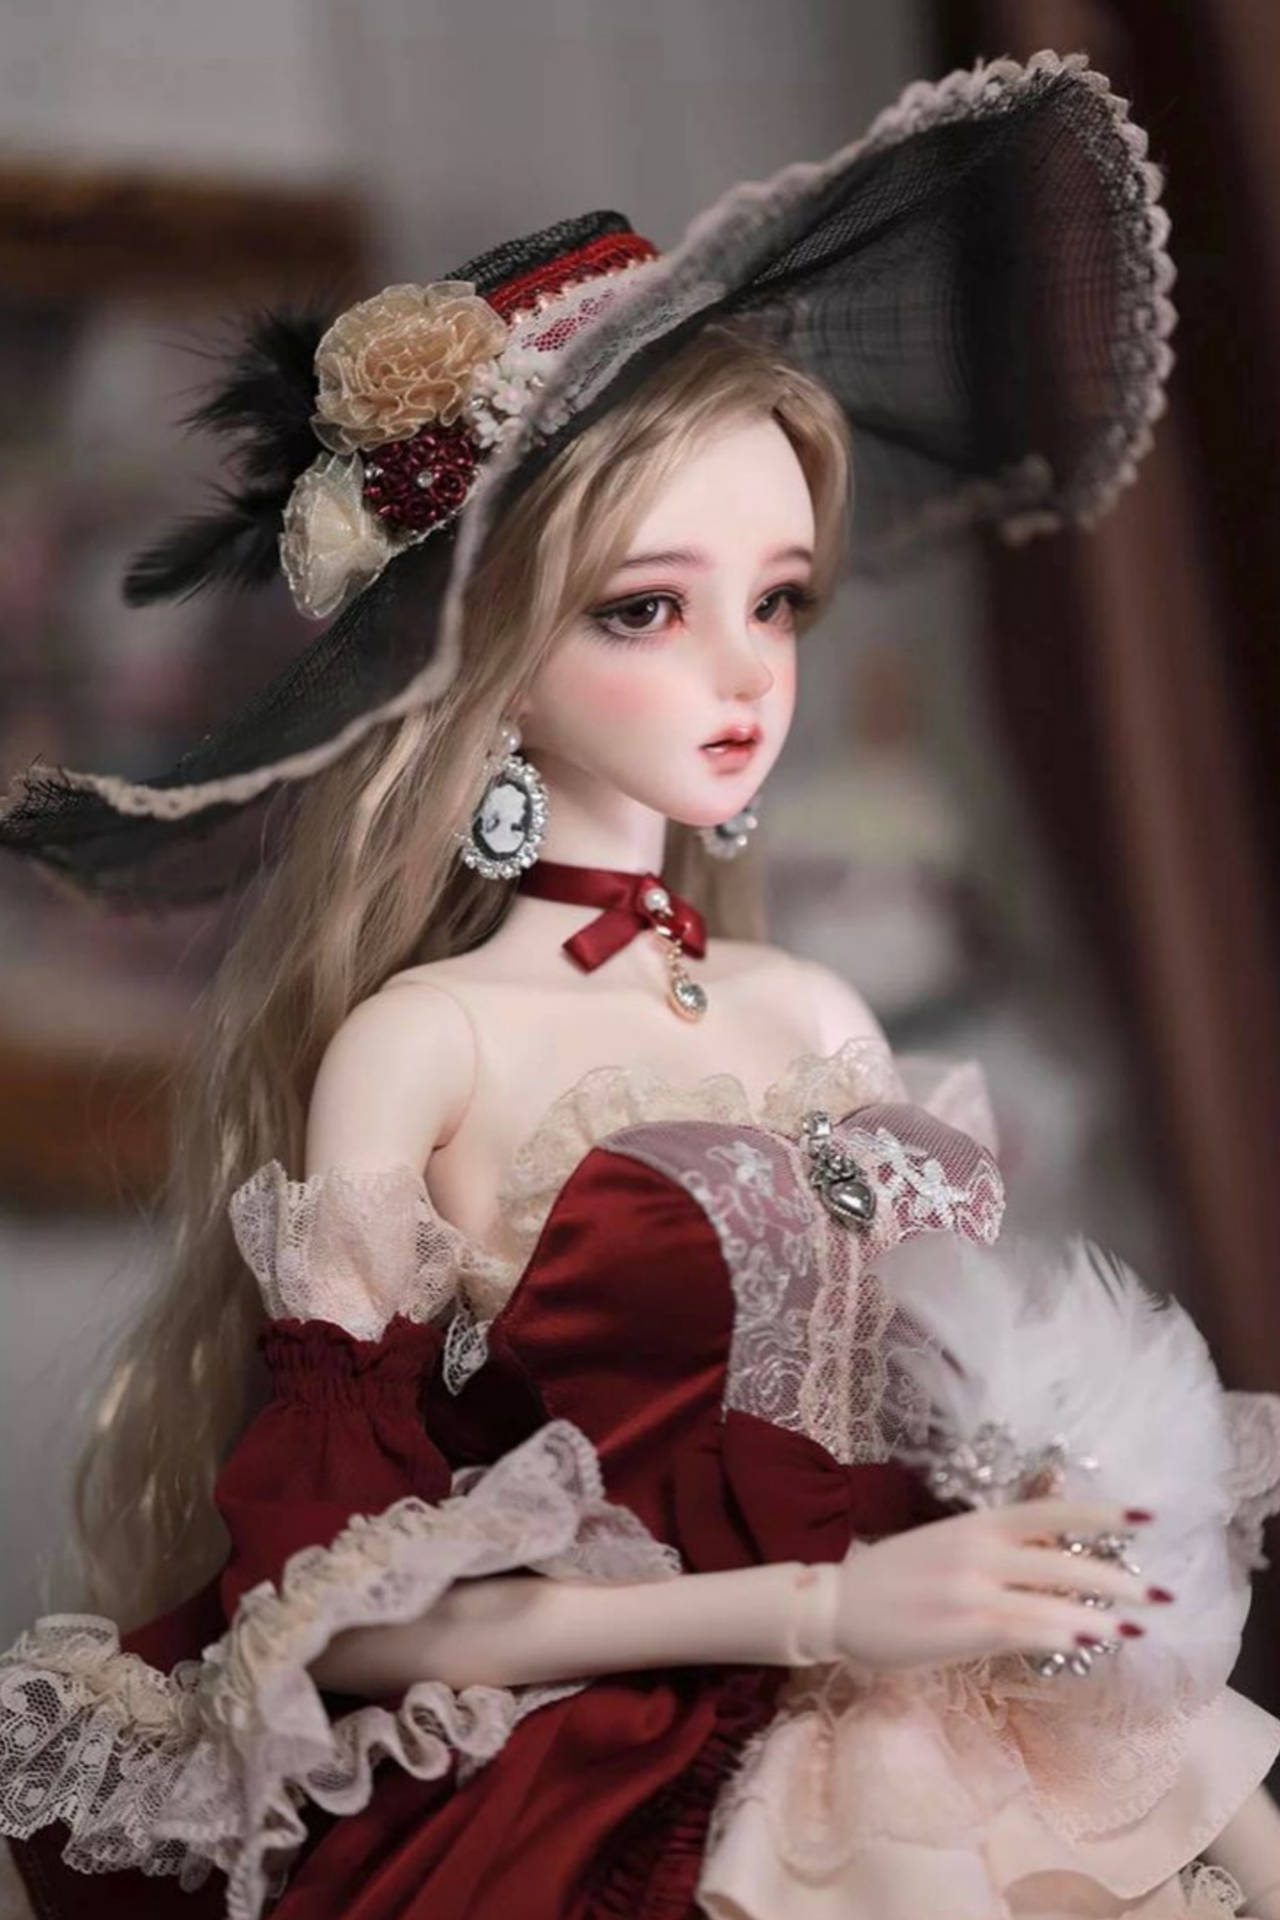 Share 77+ beautiful barbie doll wallpaper latest